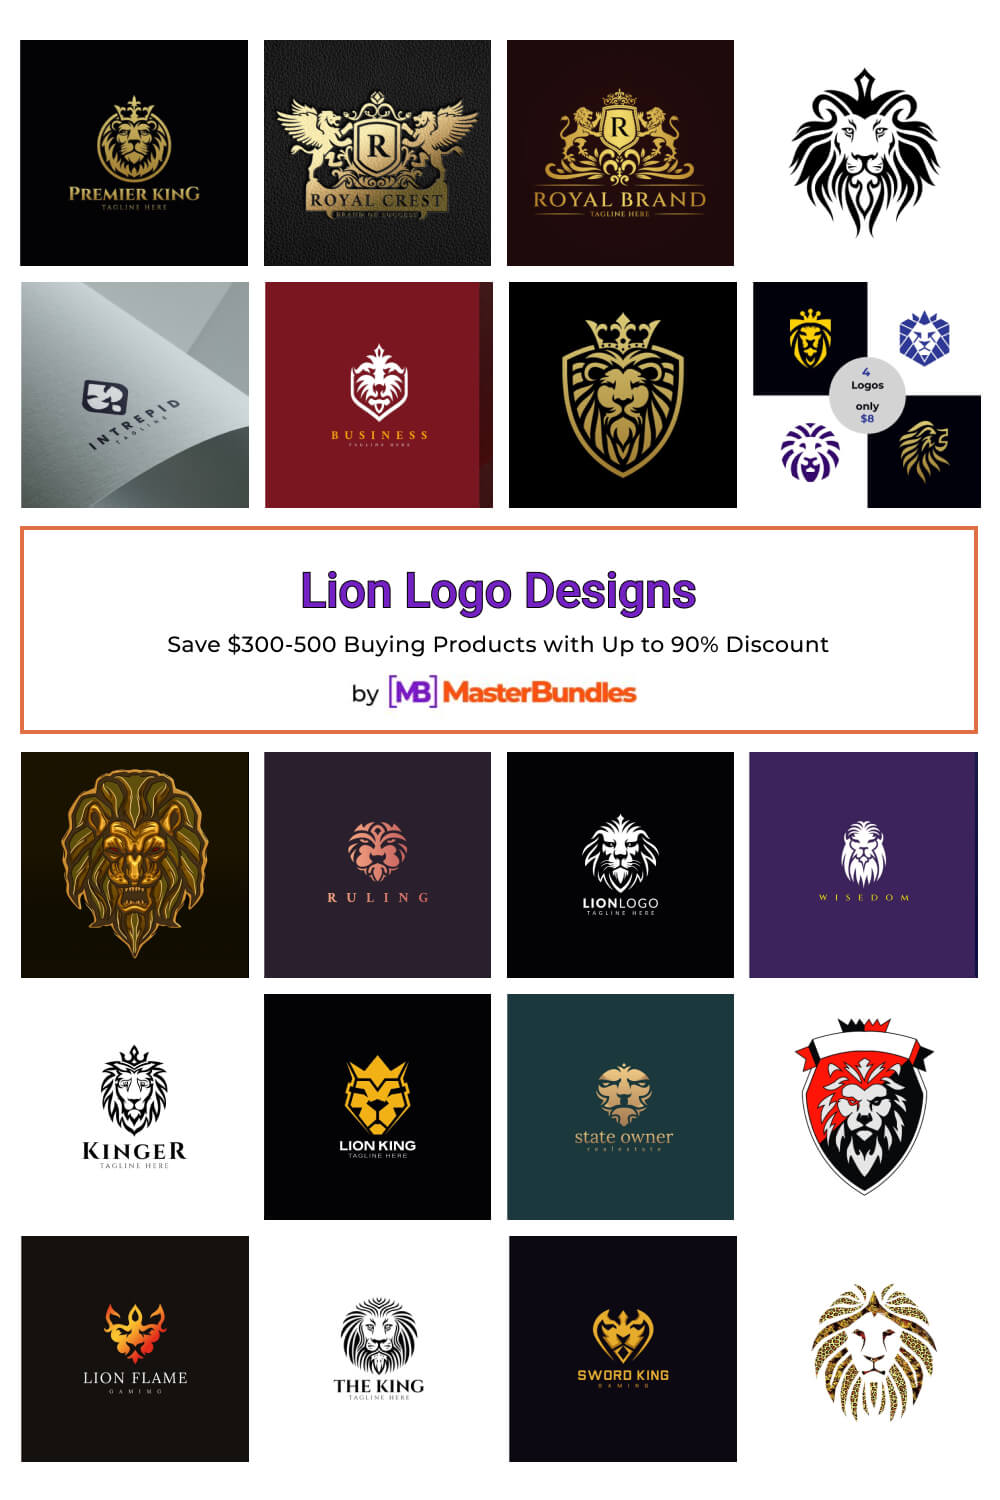 lion logo designs pinterest image.